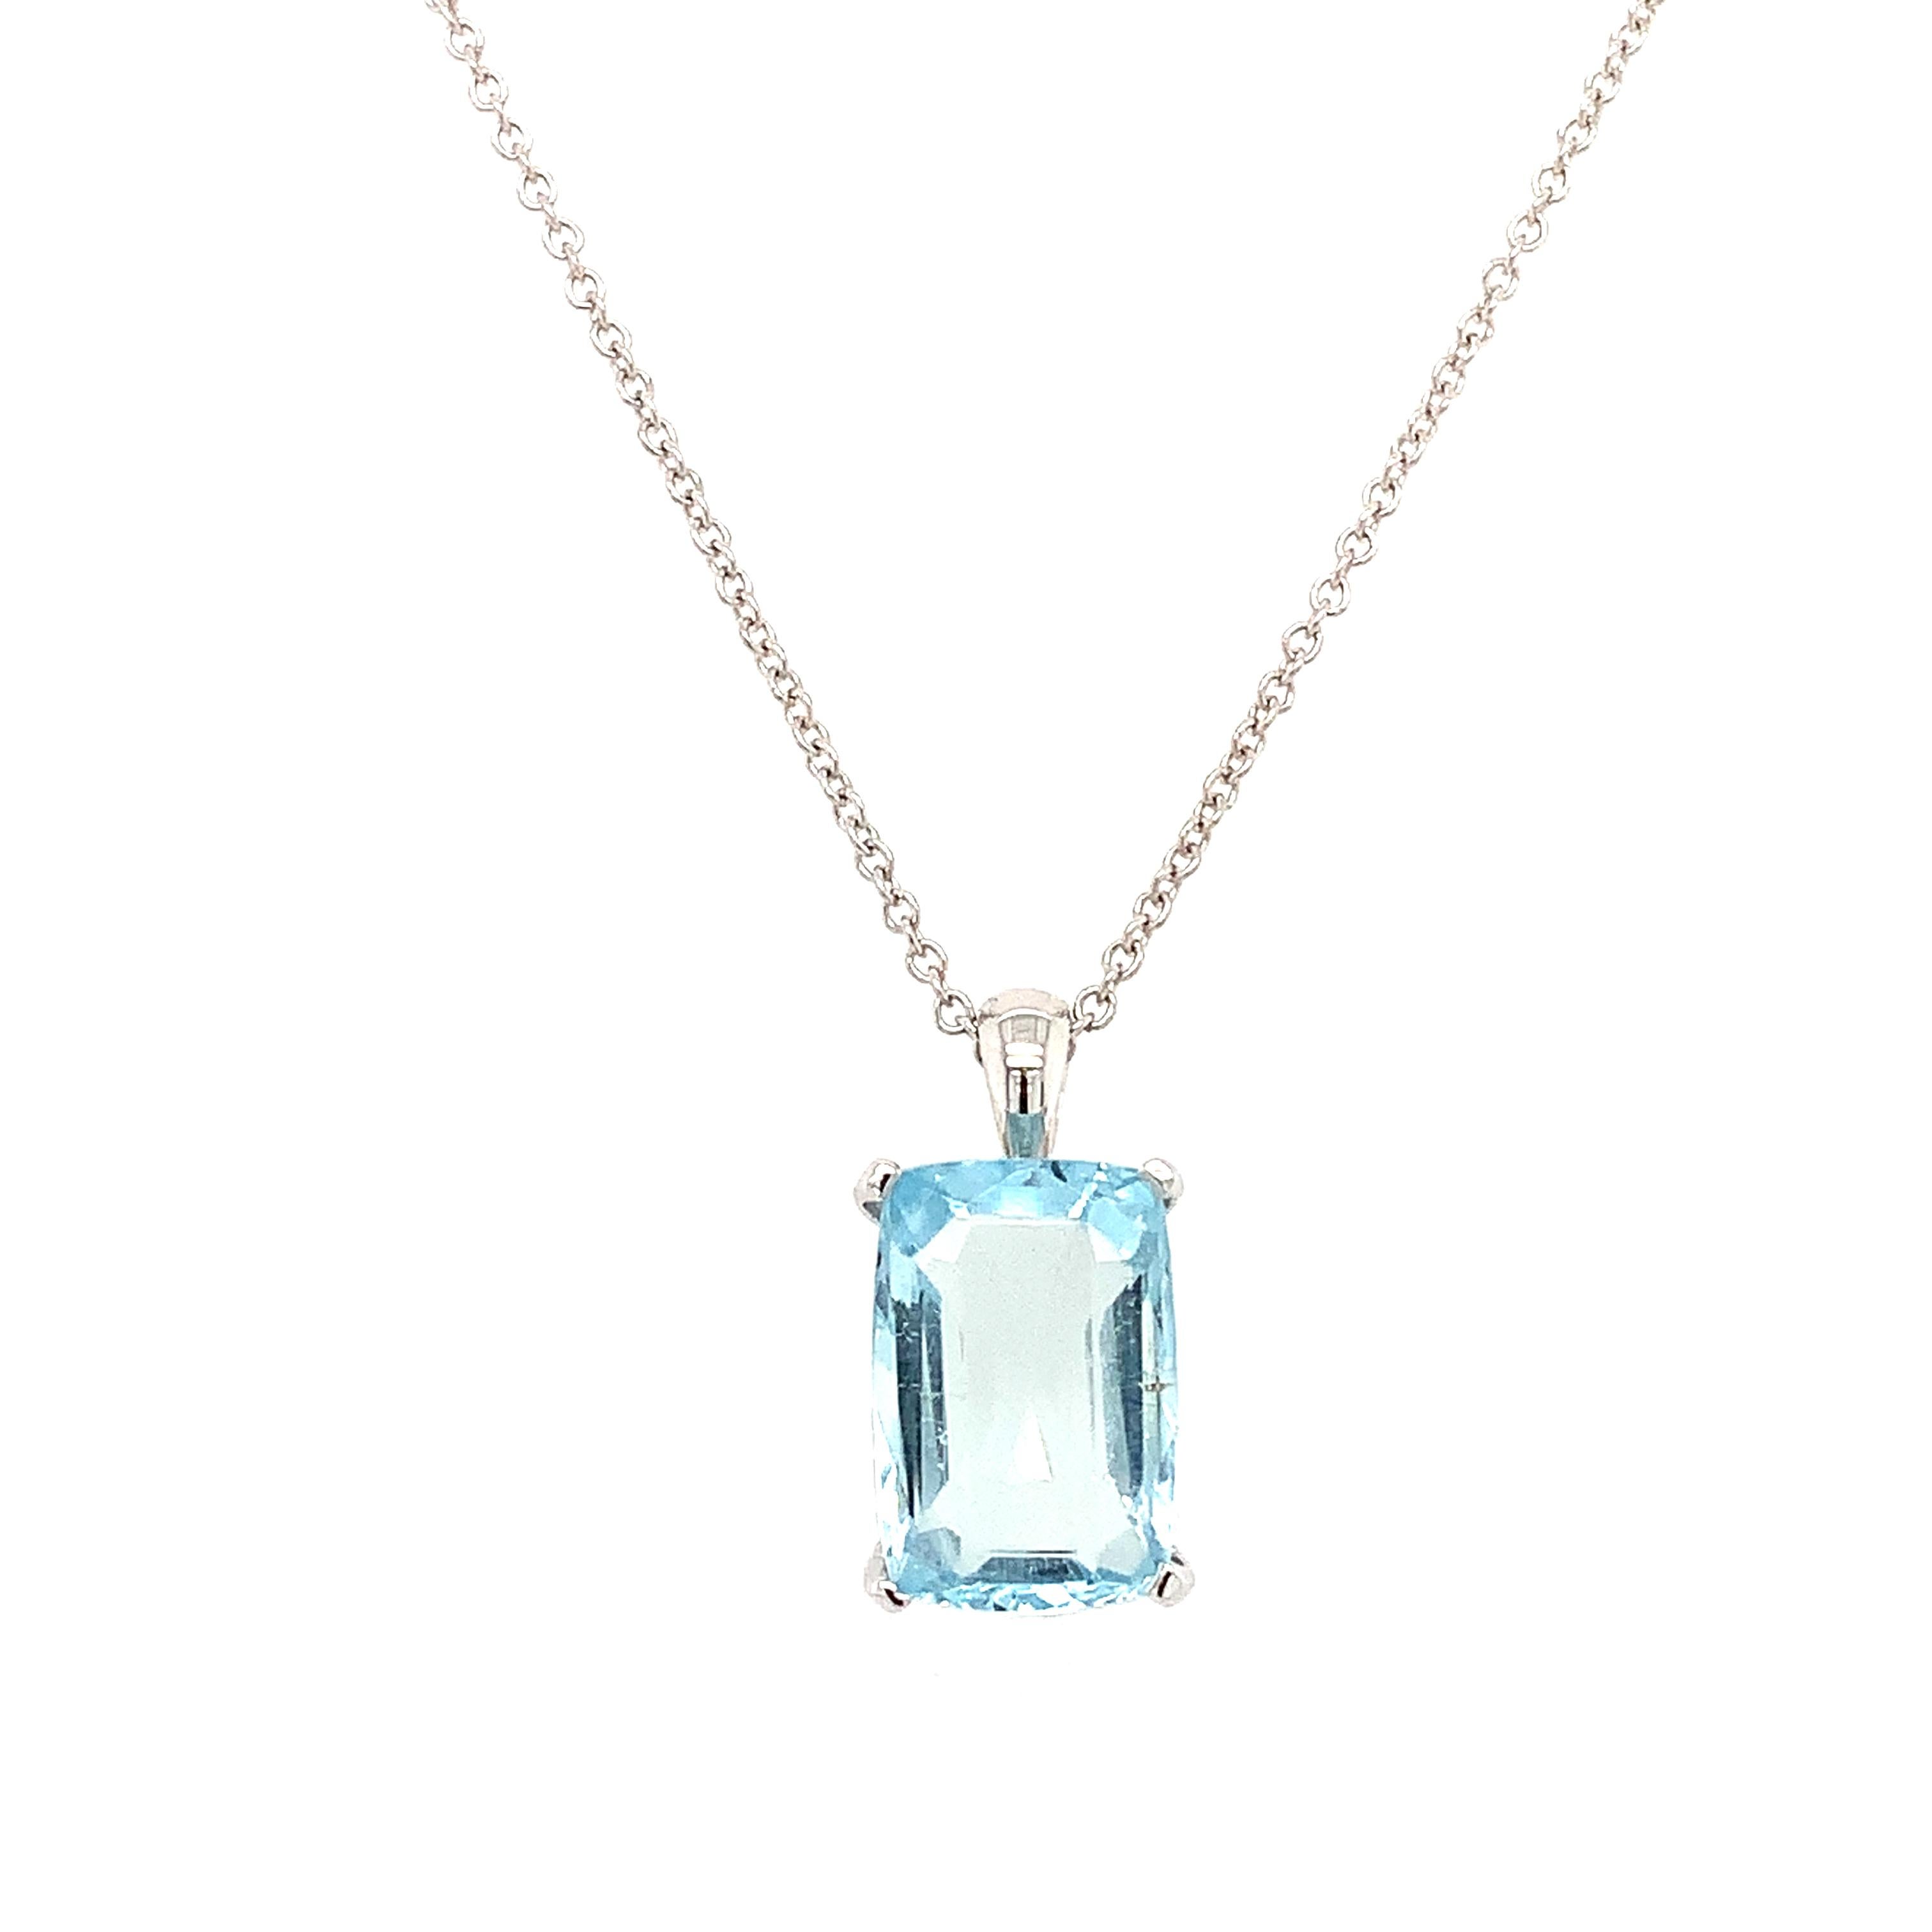 Emerald Cut Aquamarine emerald cut solitaire pendant necklace 18k white gold For Sale